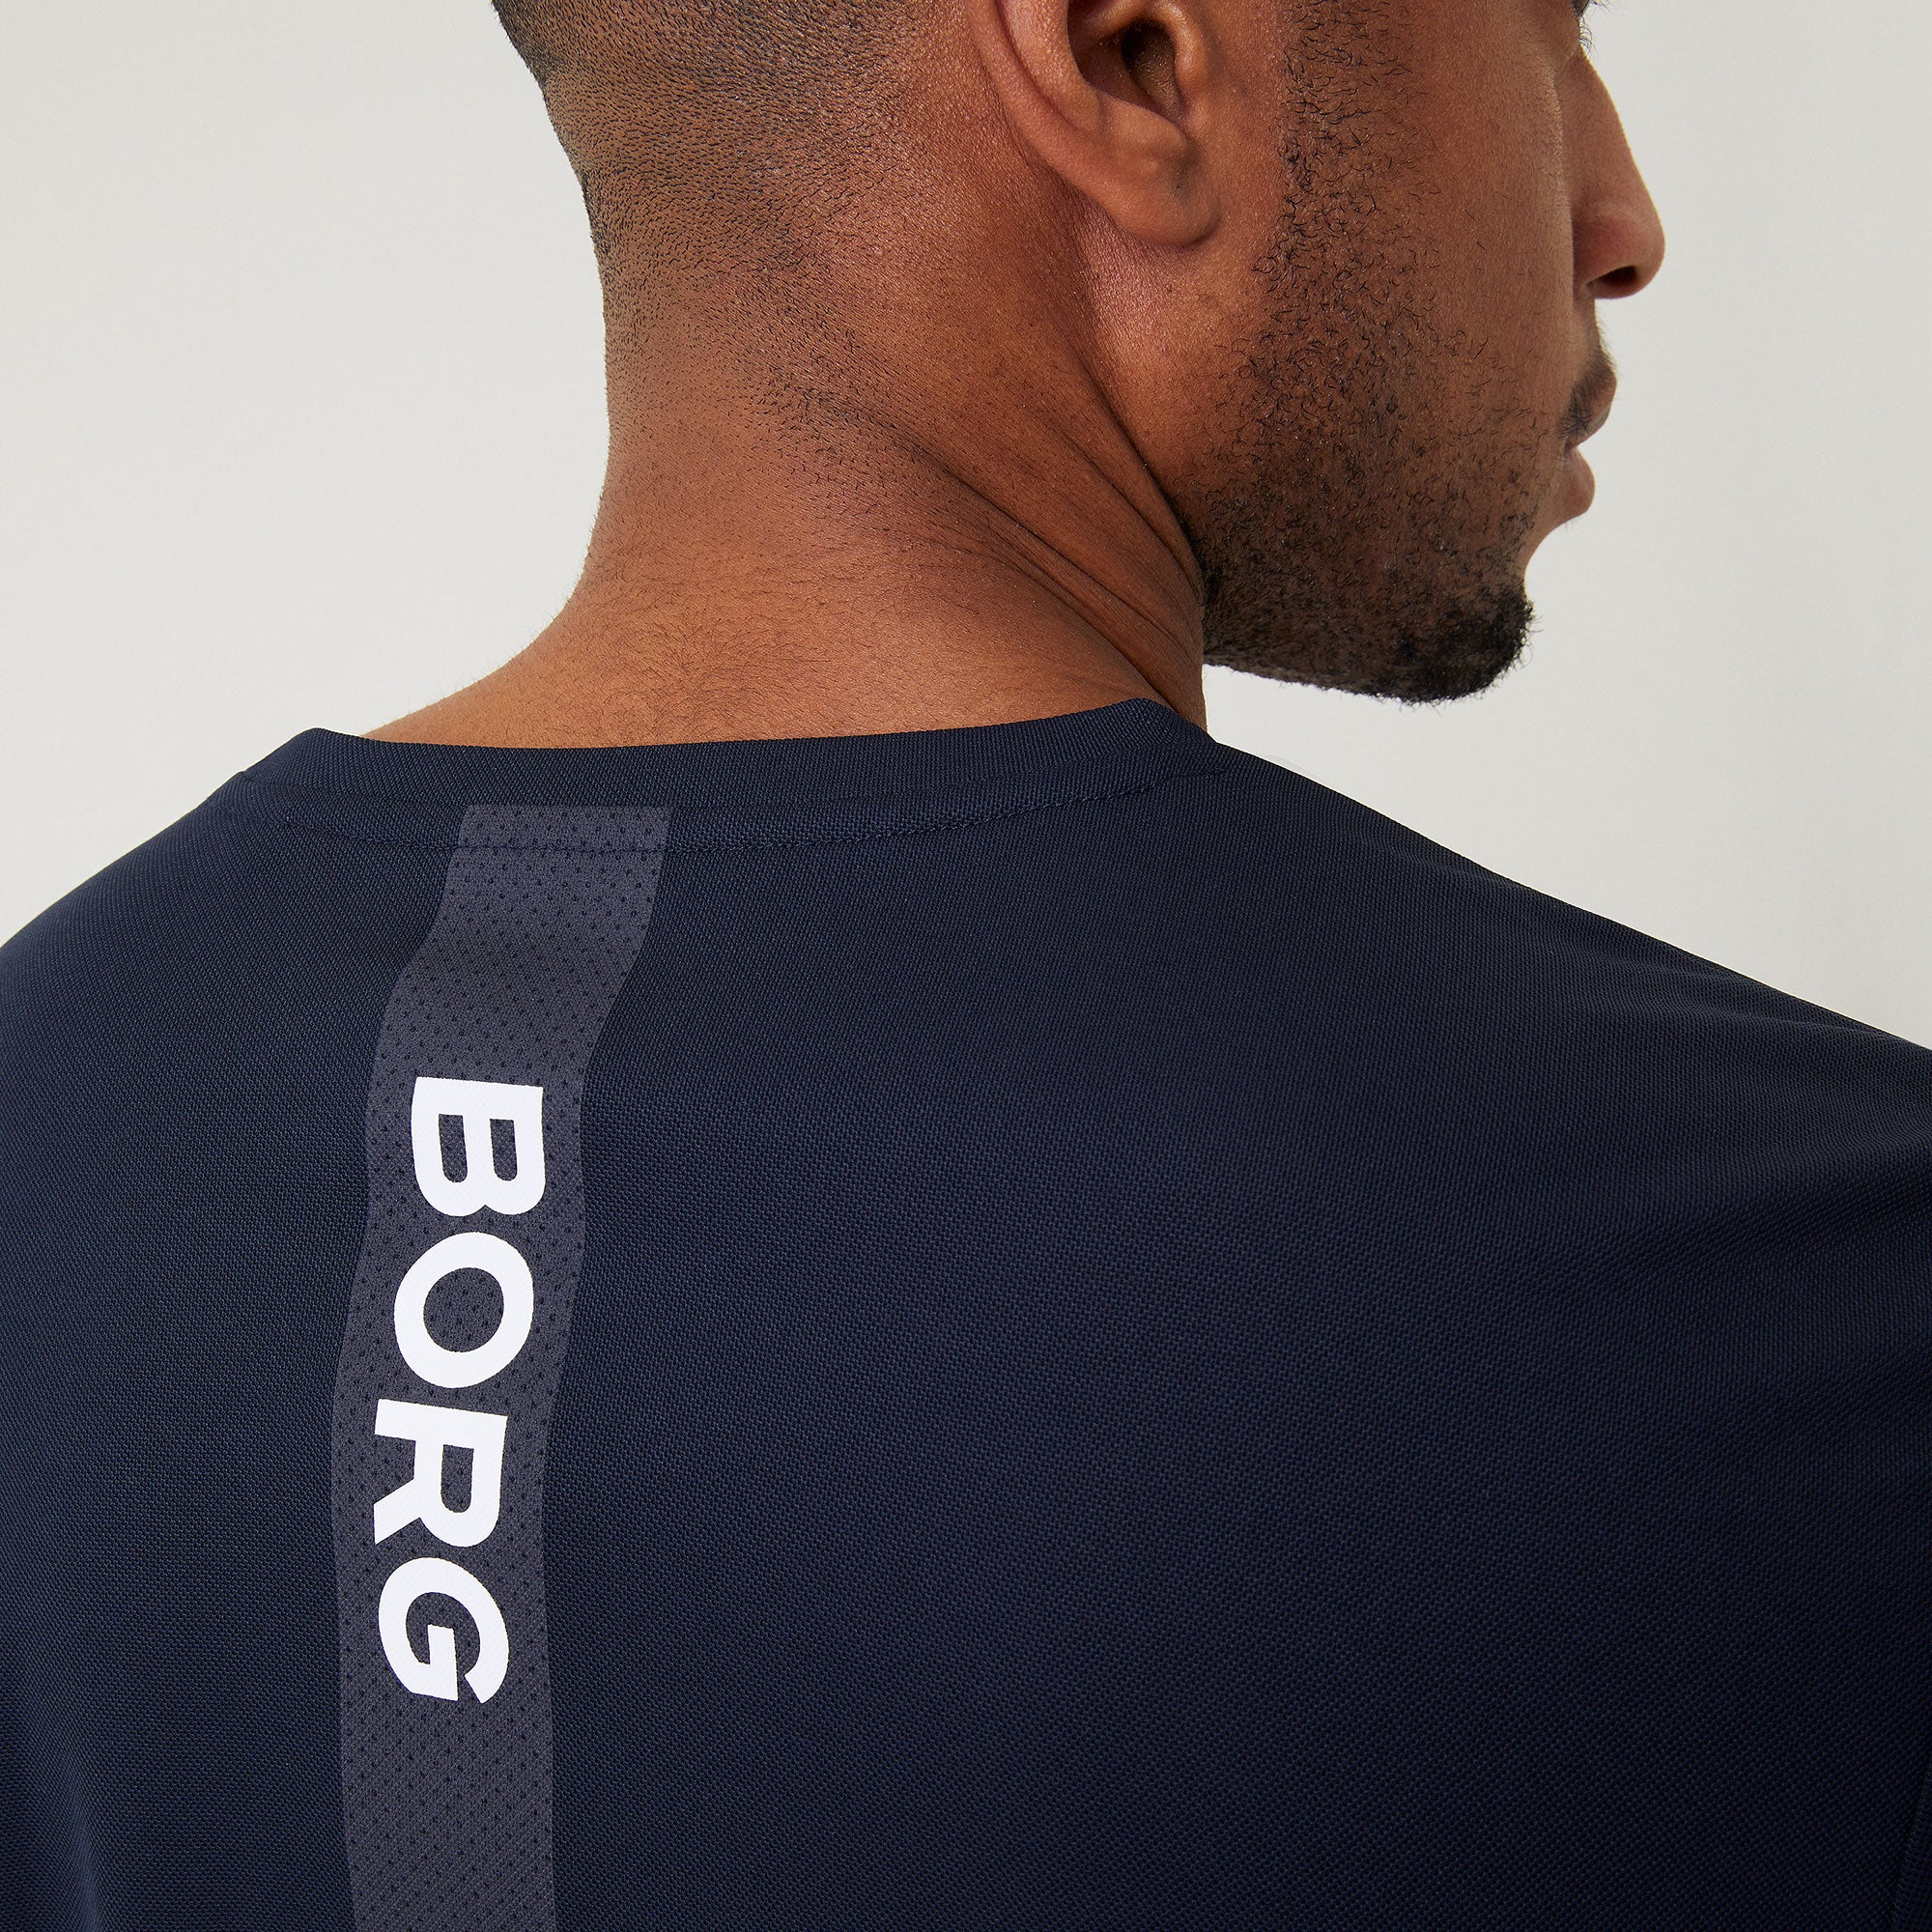 Björn Borg Ace Men's Tennis Shirt Dark Blue (4)